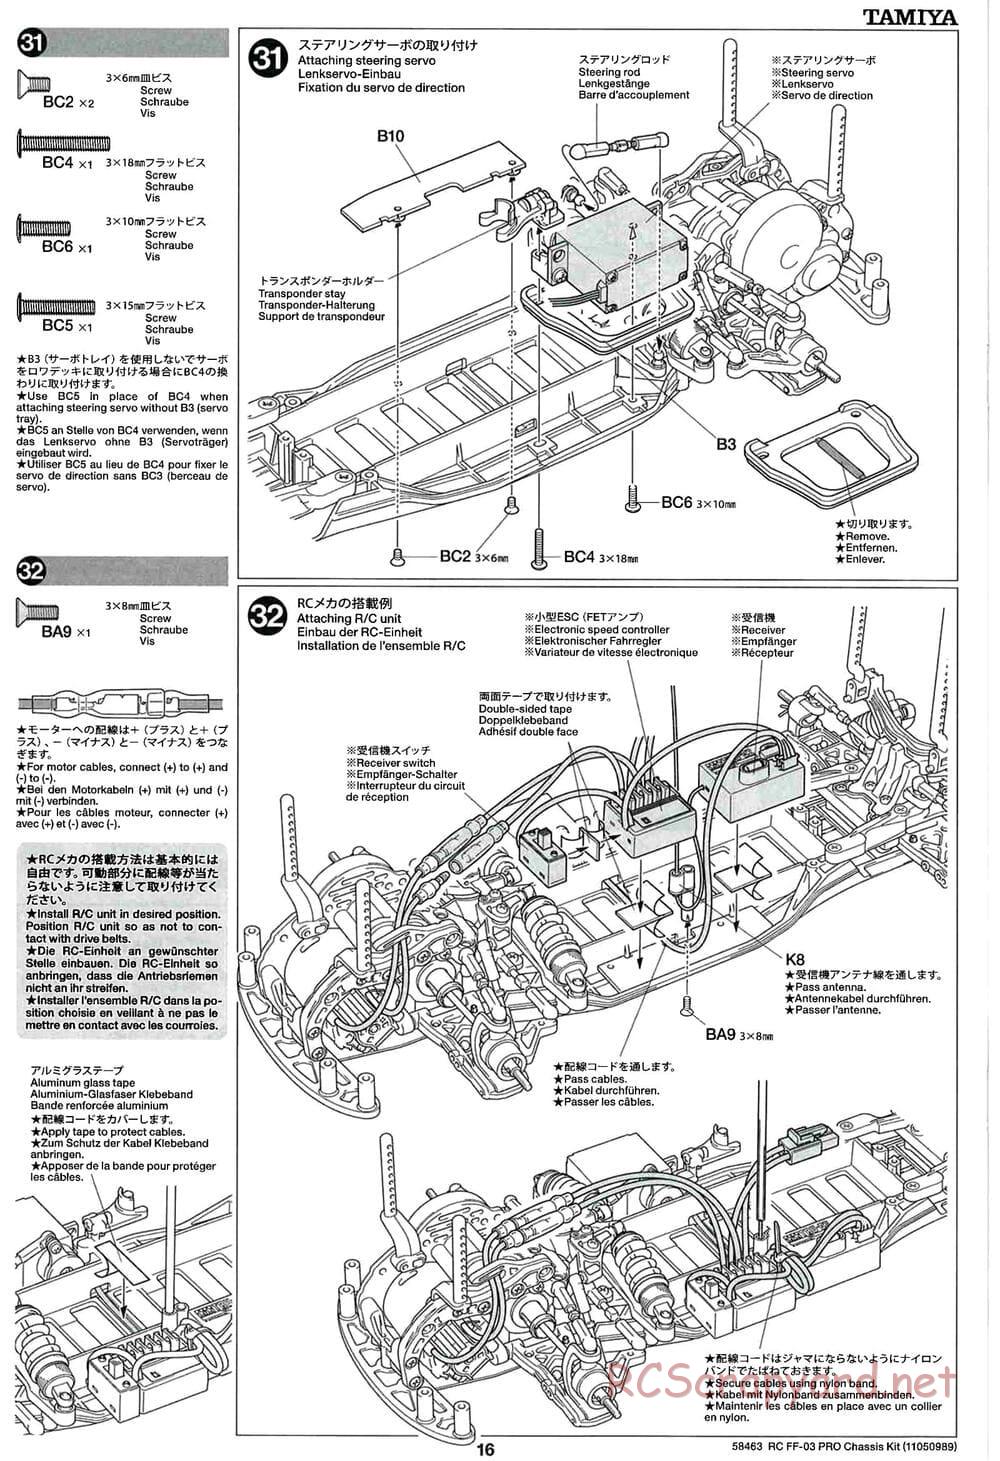 Tamiya - FF-03 Pro Chassis - Manual - Page 16